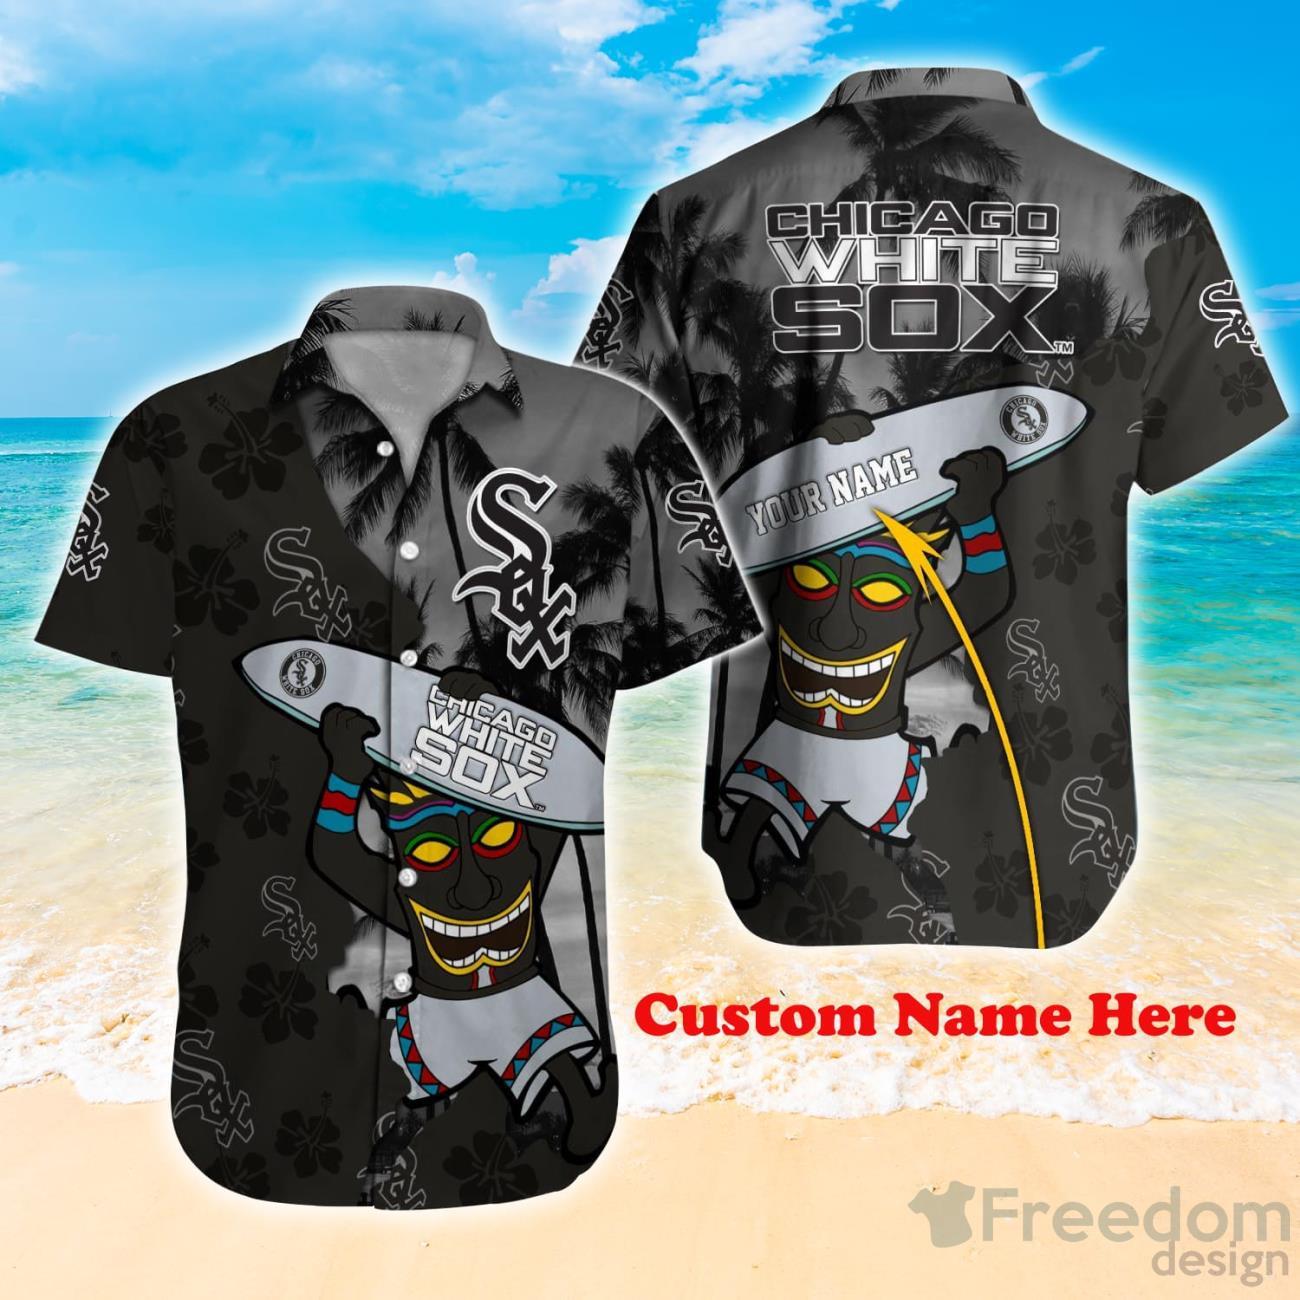 Chicago White Sox Bears Cubs Blackhawks shirt - Freedomdesign